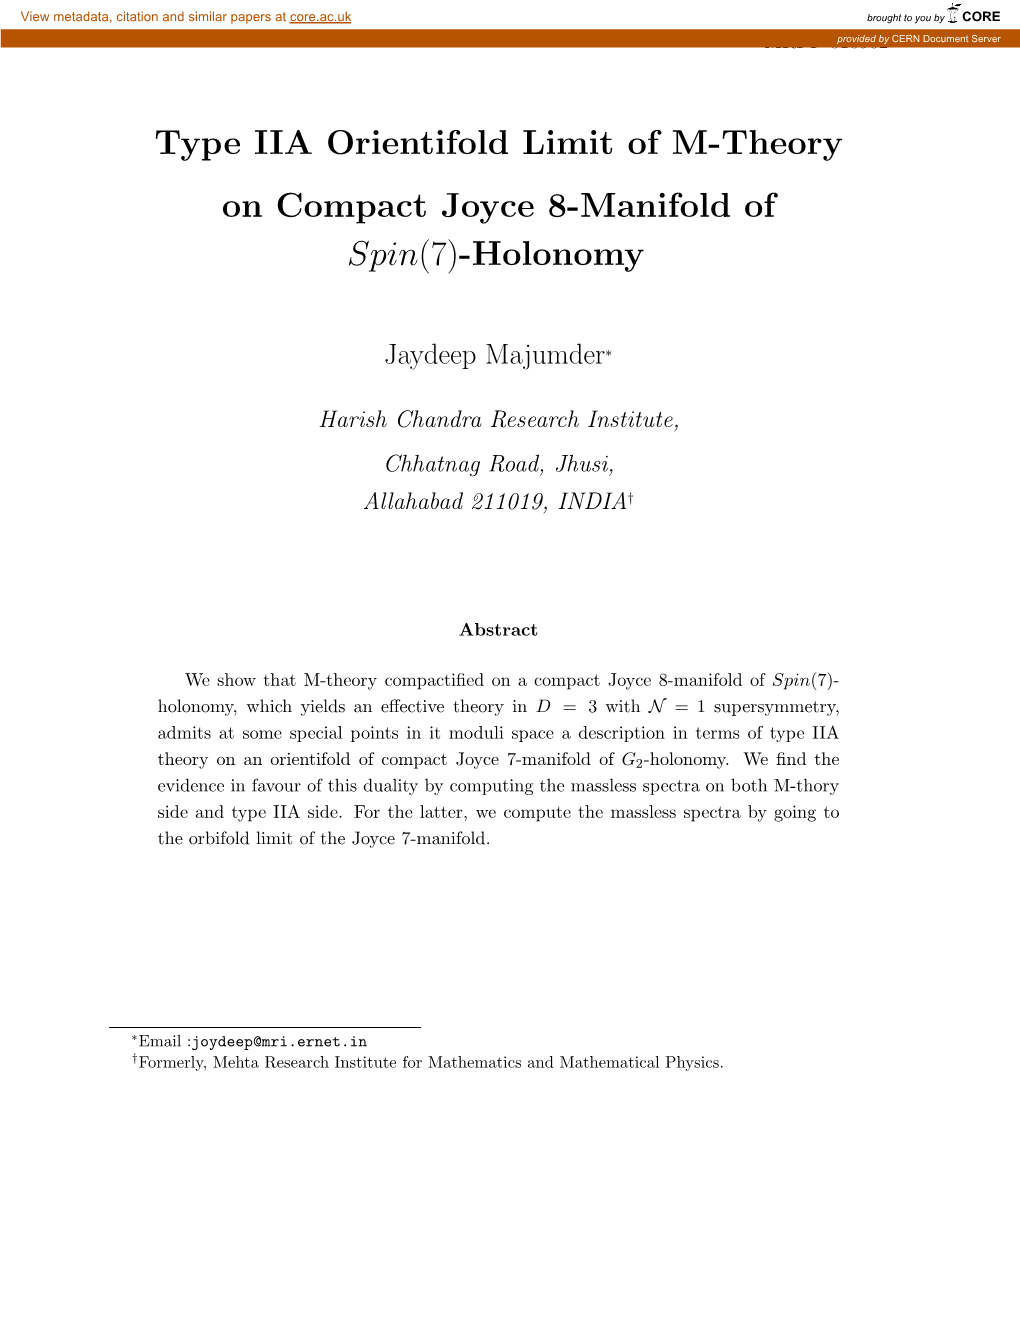 Type IIA Orientifold Limit of M-Theory on Compact Joyce 8-Manifold of Spin(7)-Holonomy